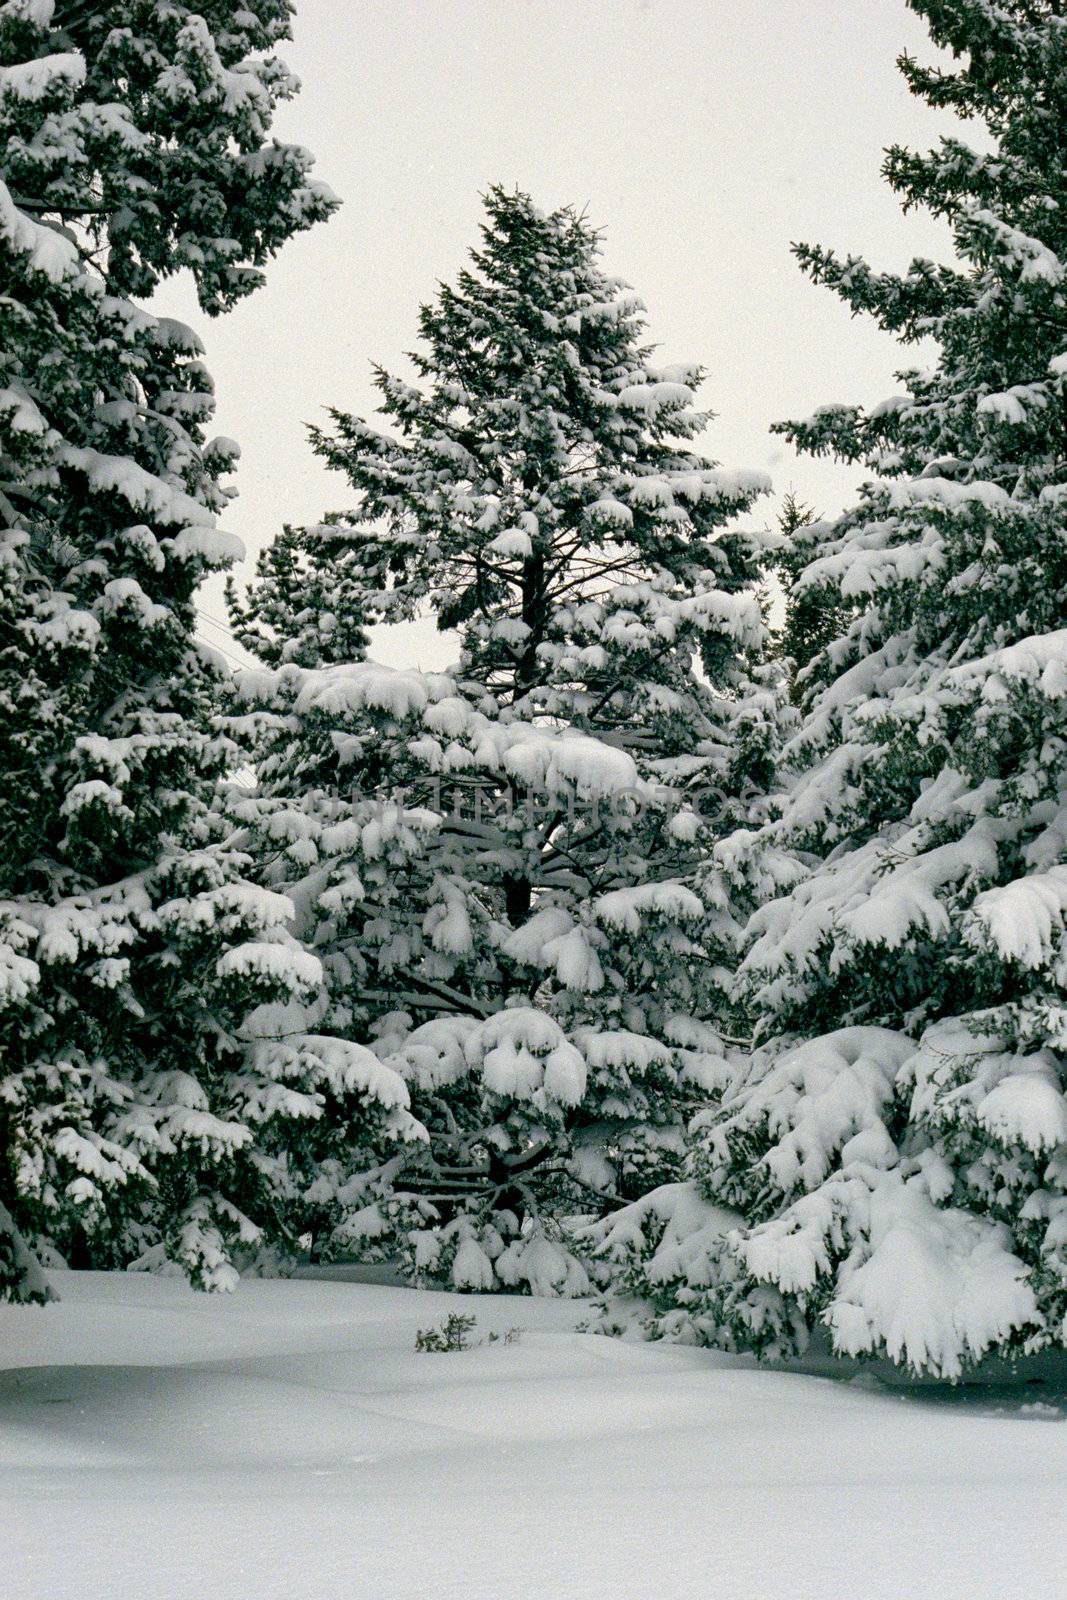 Snowed tree by mypstudio